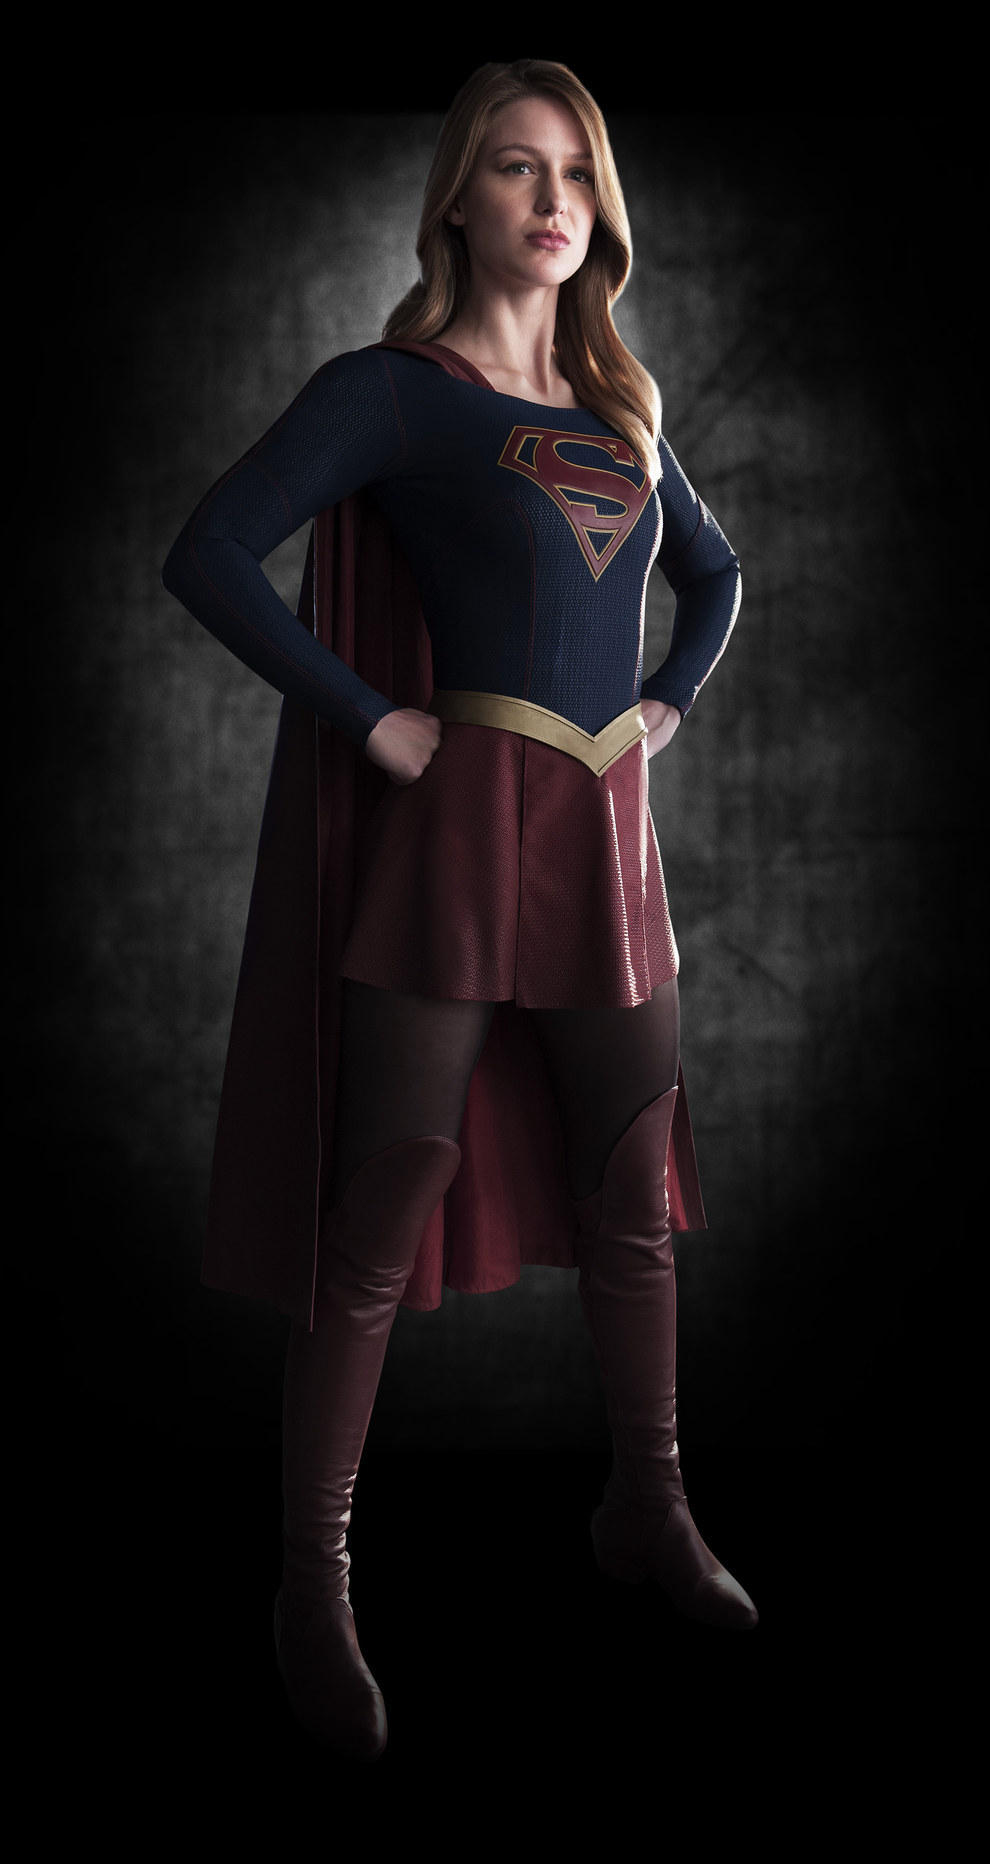 Melissa Benoist as Supergirl for CBS series.